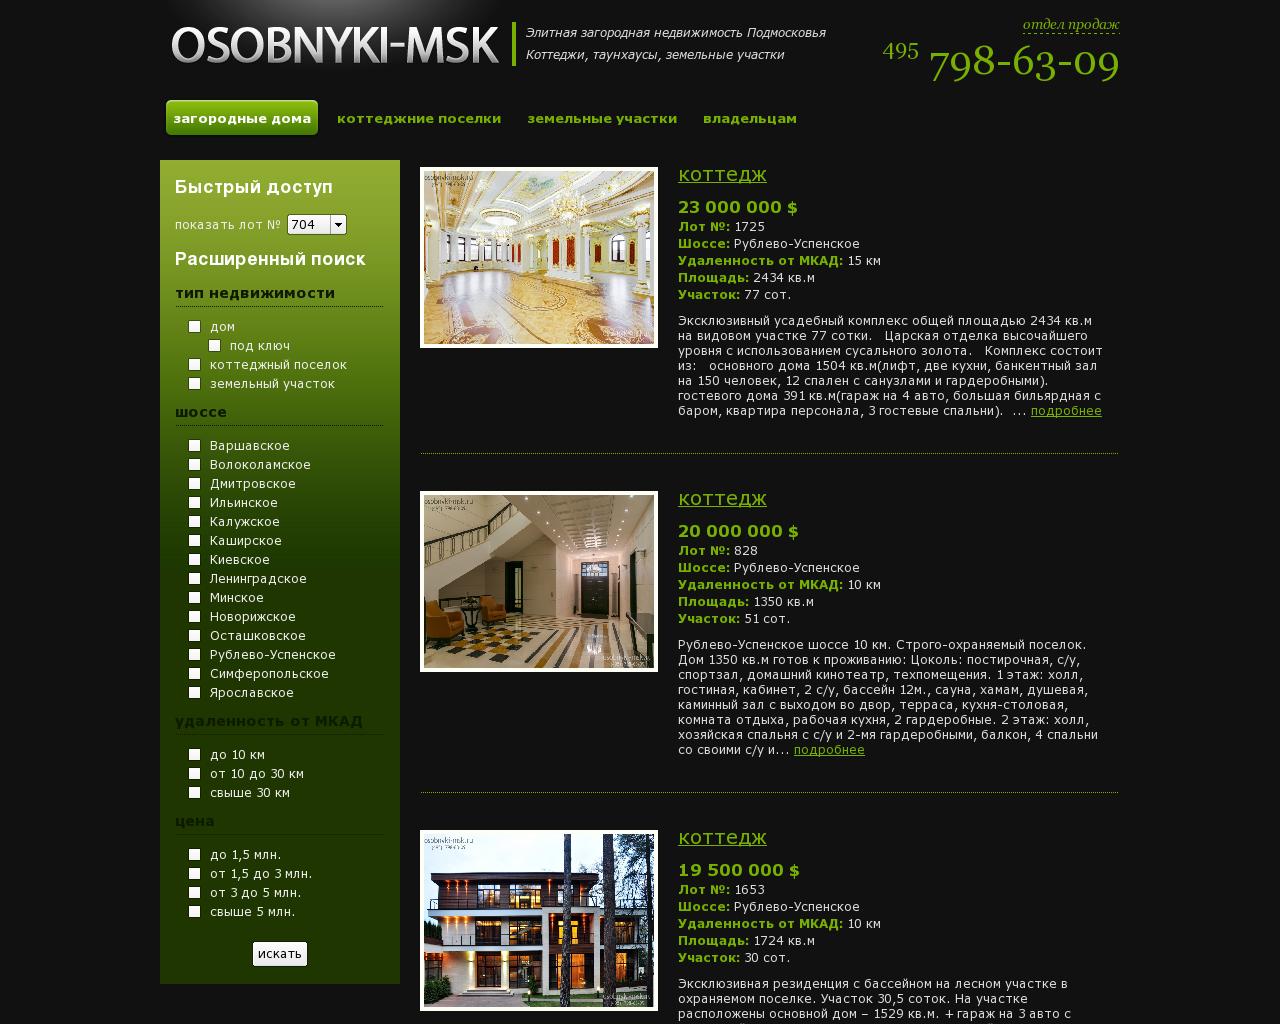 Изображение сайта osobnyki-msk.ru в разрешении 1280x1024